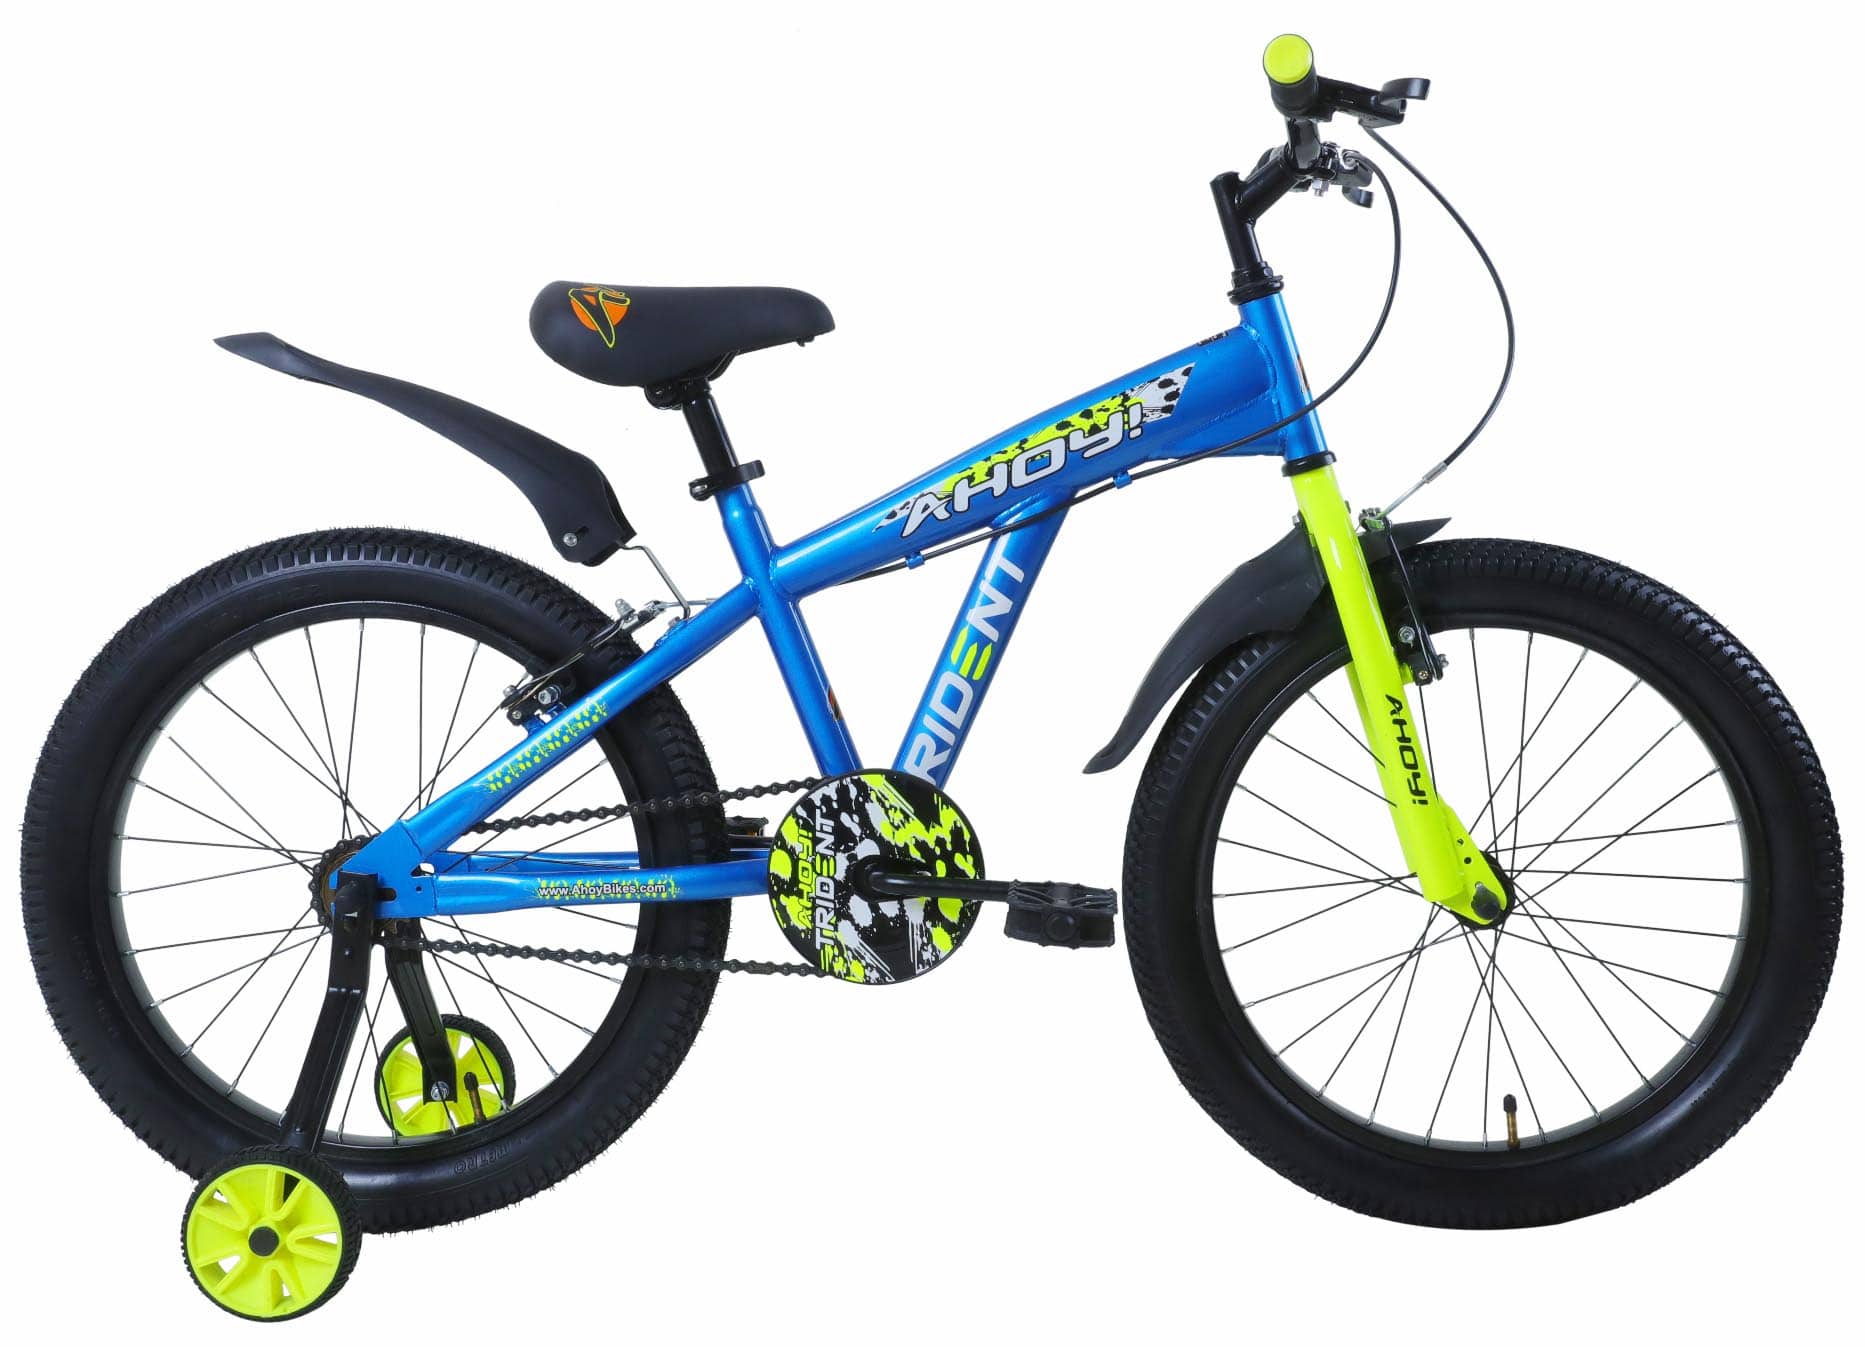 Trident Childrens Bike Single Speed 20T | Buy Blue Kids Bike for Boys